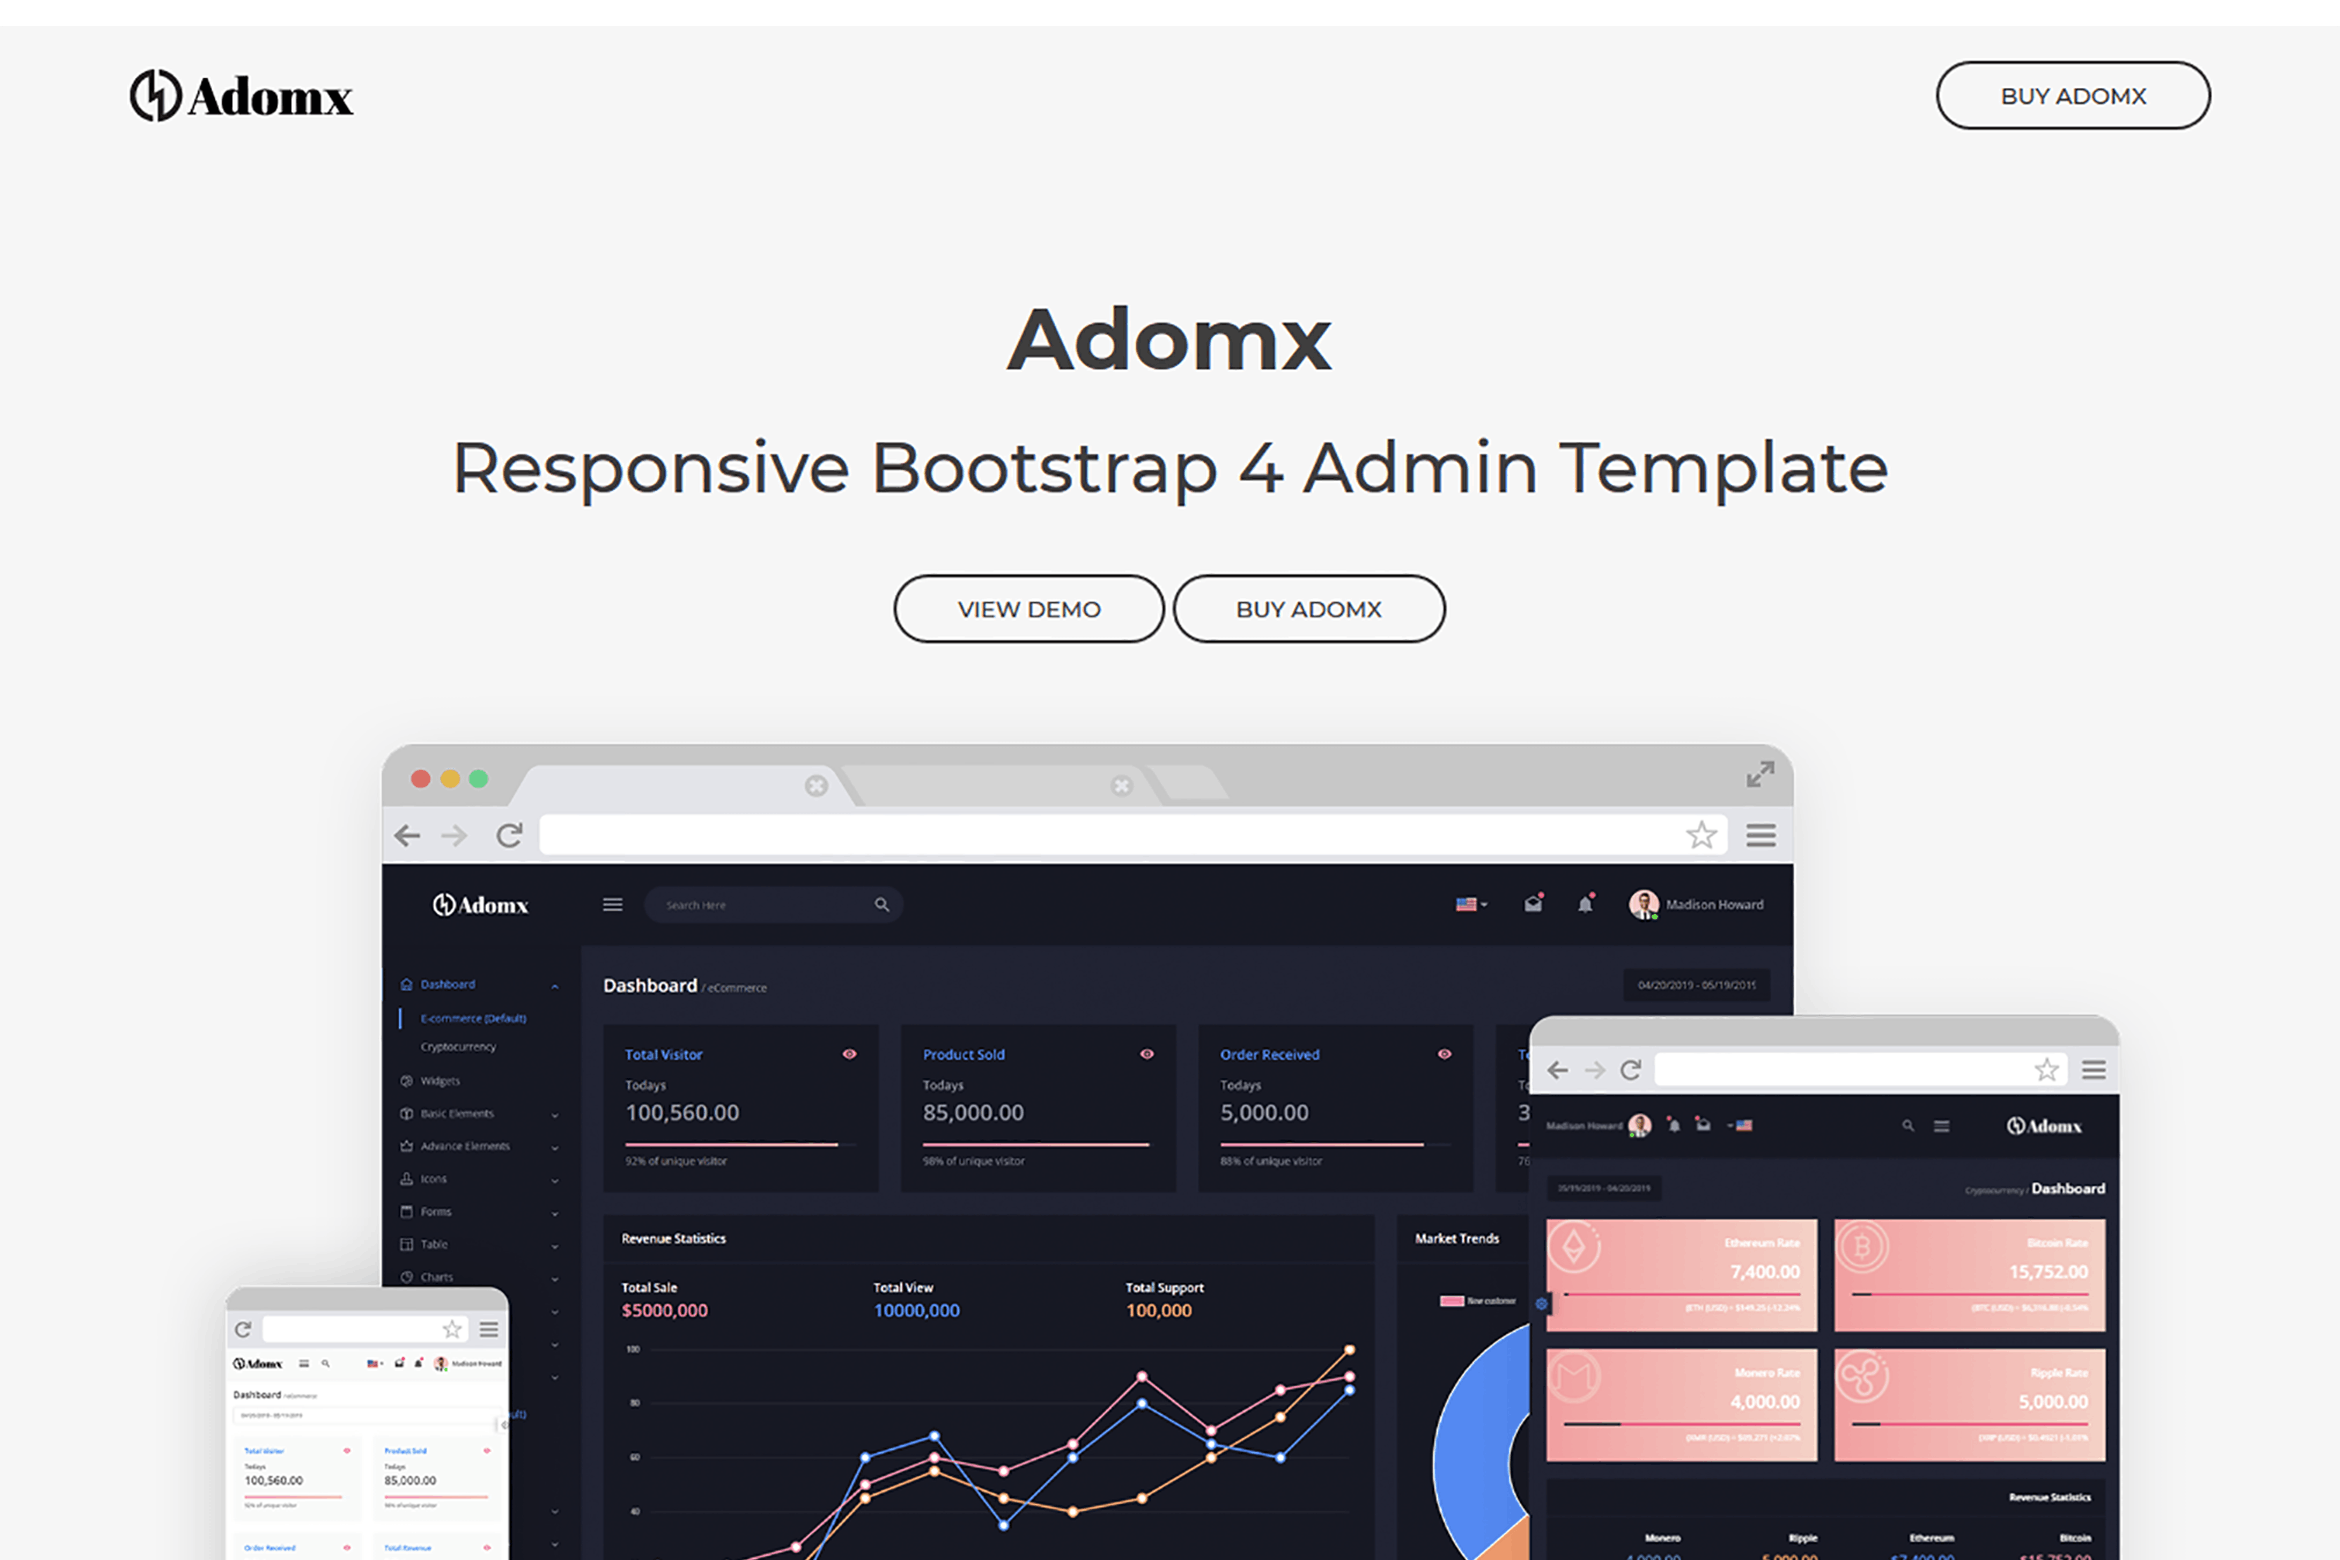 响应式Bootstrap 4网站管理后台模板非凡图库精选 Adomx – Responsive Bootstrap 4 Admin Template插图